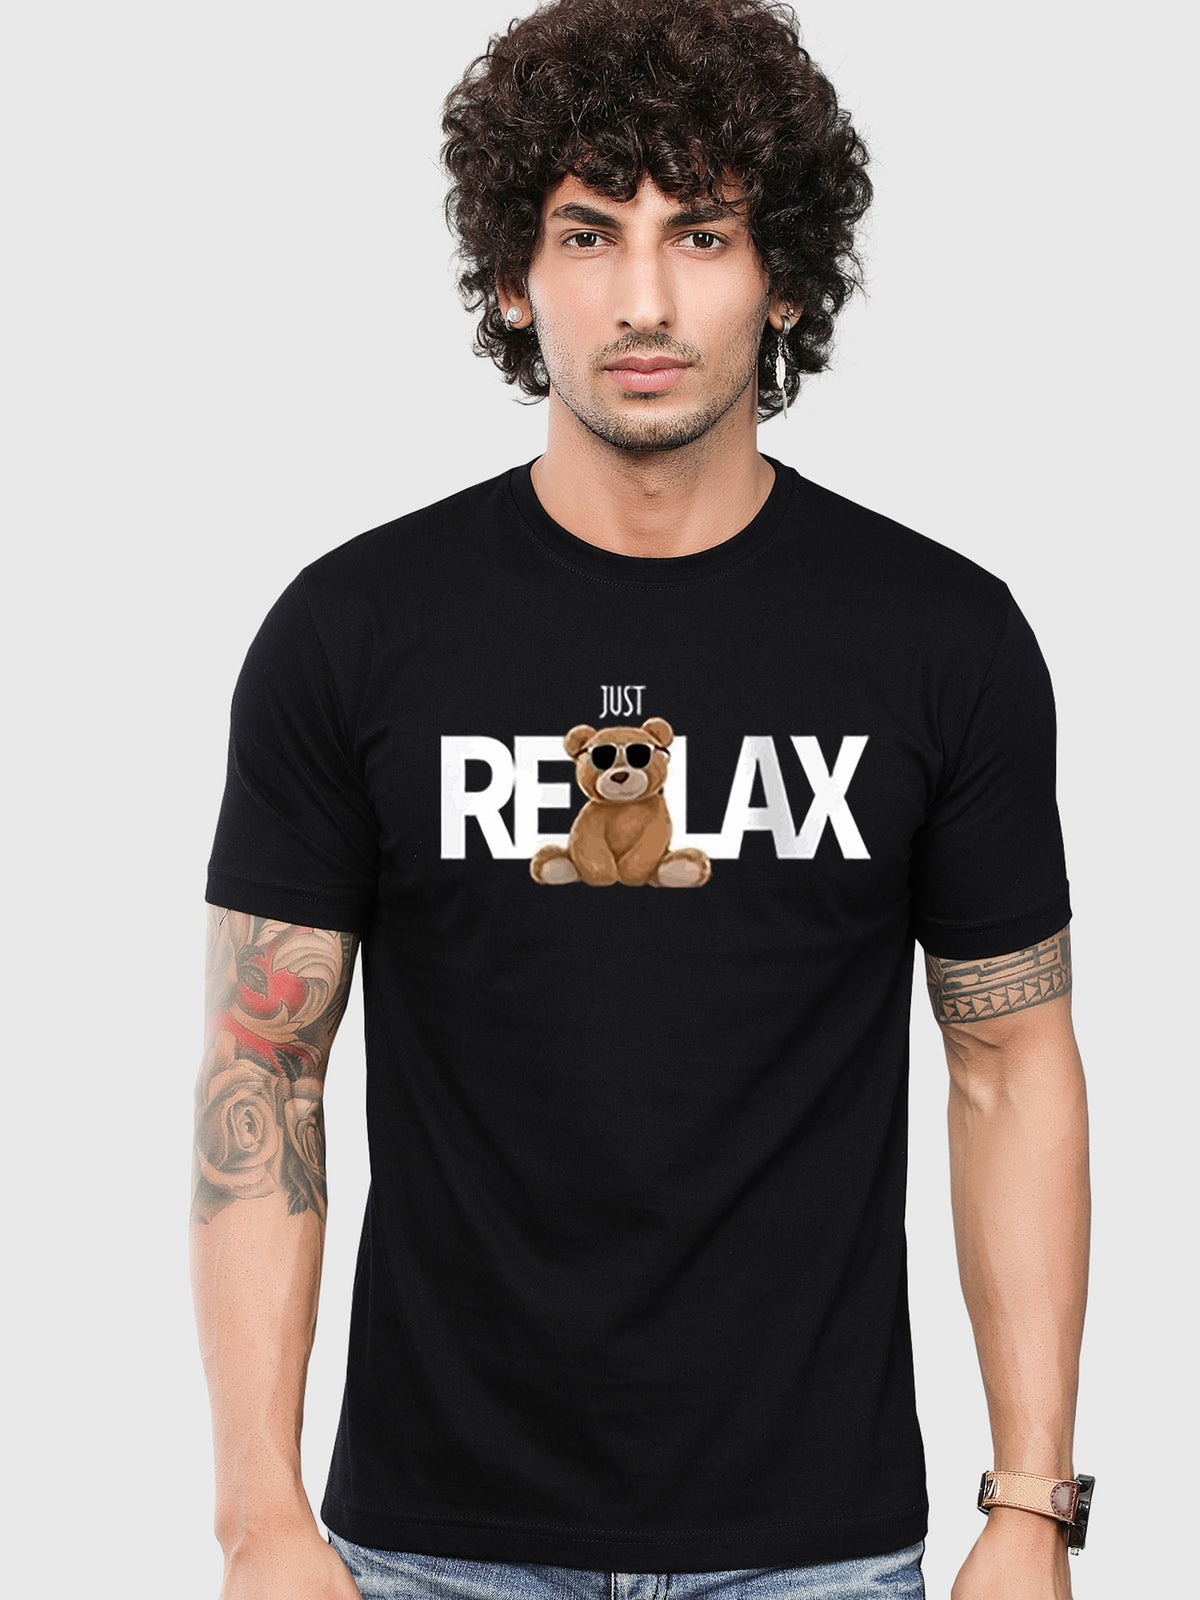 Men's Black Just Relax Printed T-shirt